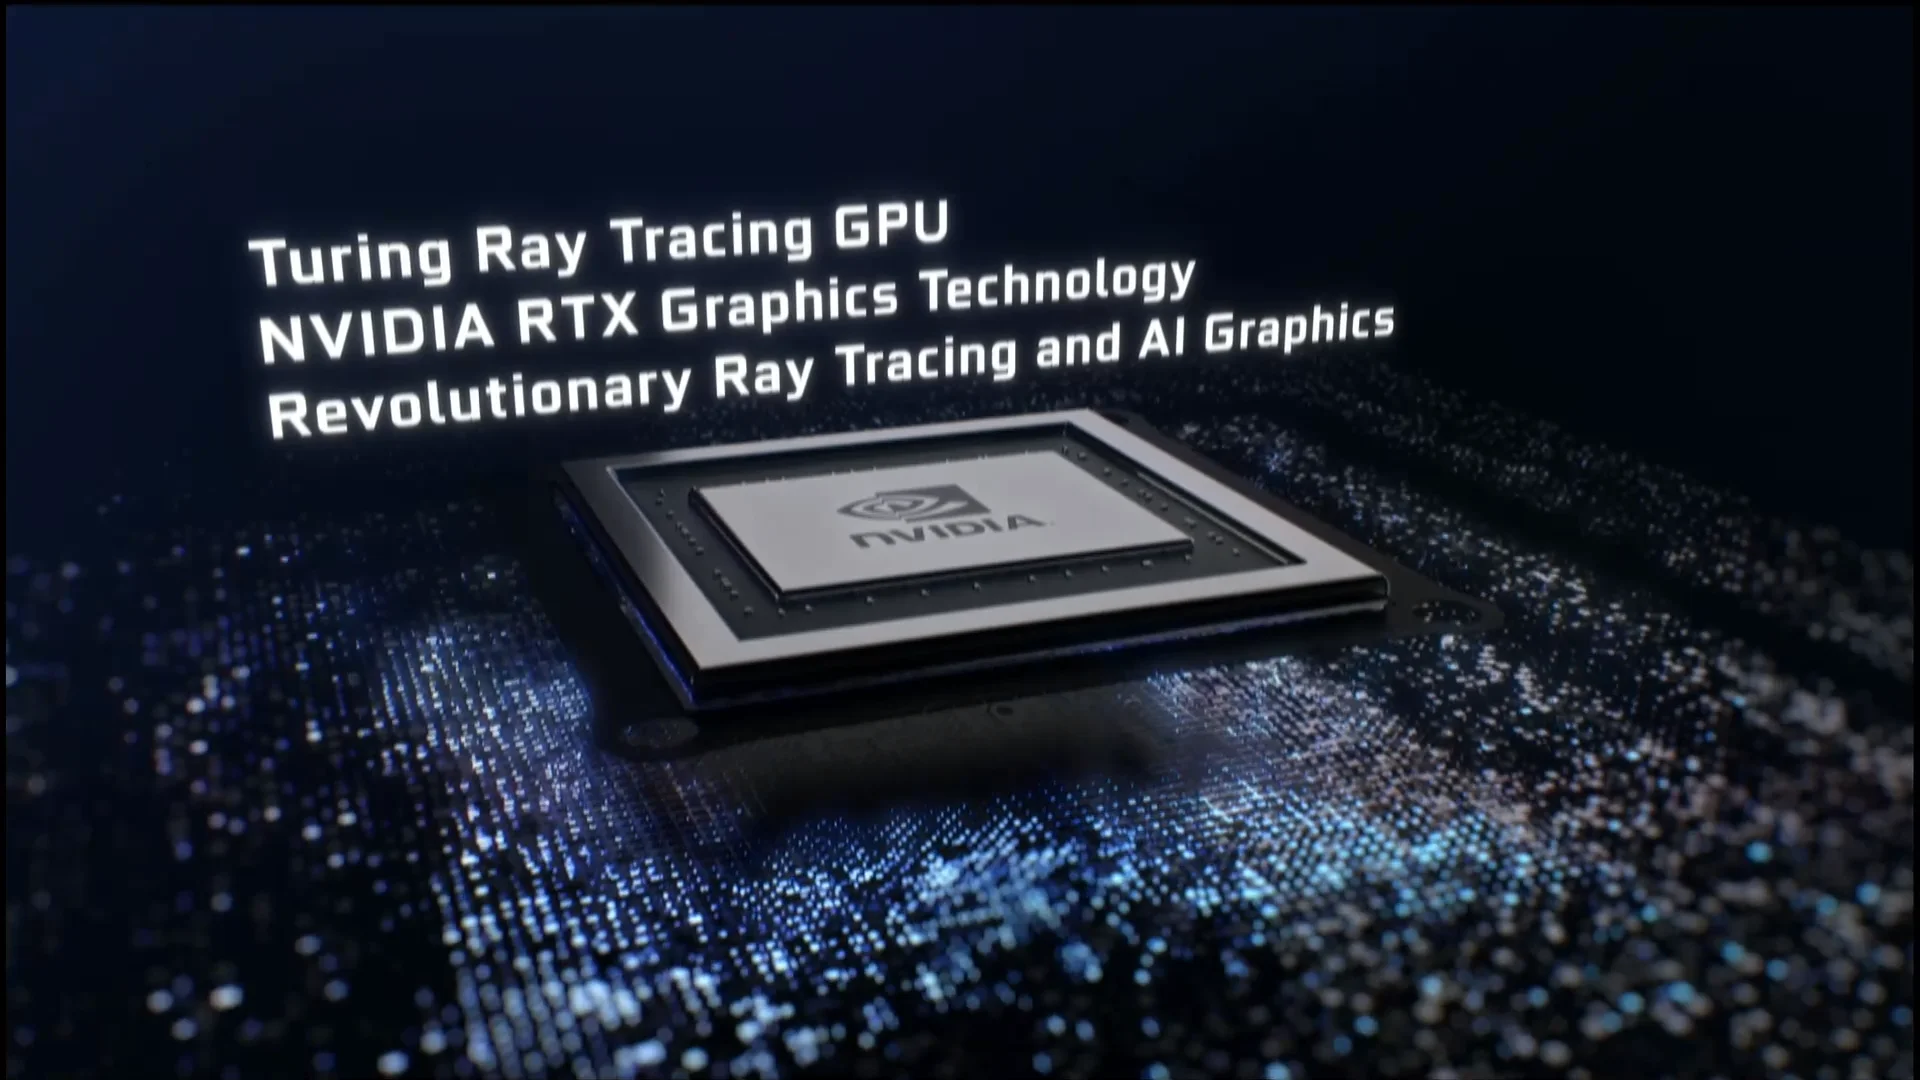 Официально: Nvidia представила новое поколение видеокарт — RTX 2080, 2080 Ti и 2070 - фото 1